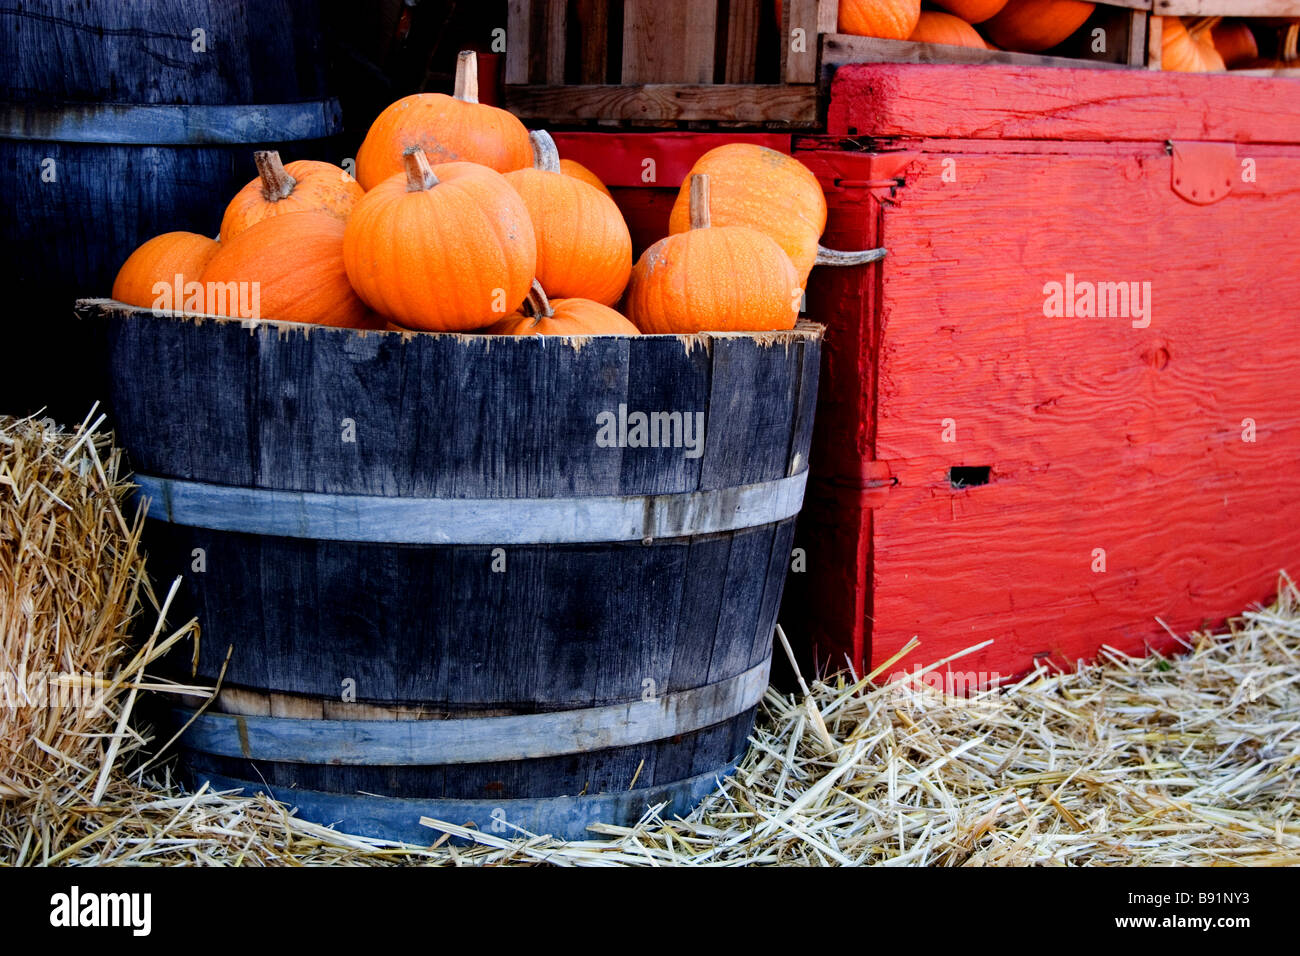 Autumn scene of a wooden barrel of pumpkins Stock Photo